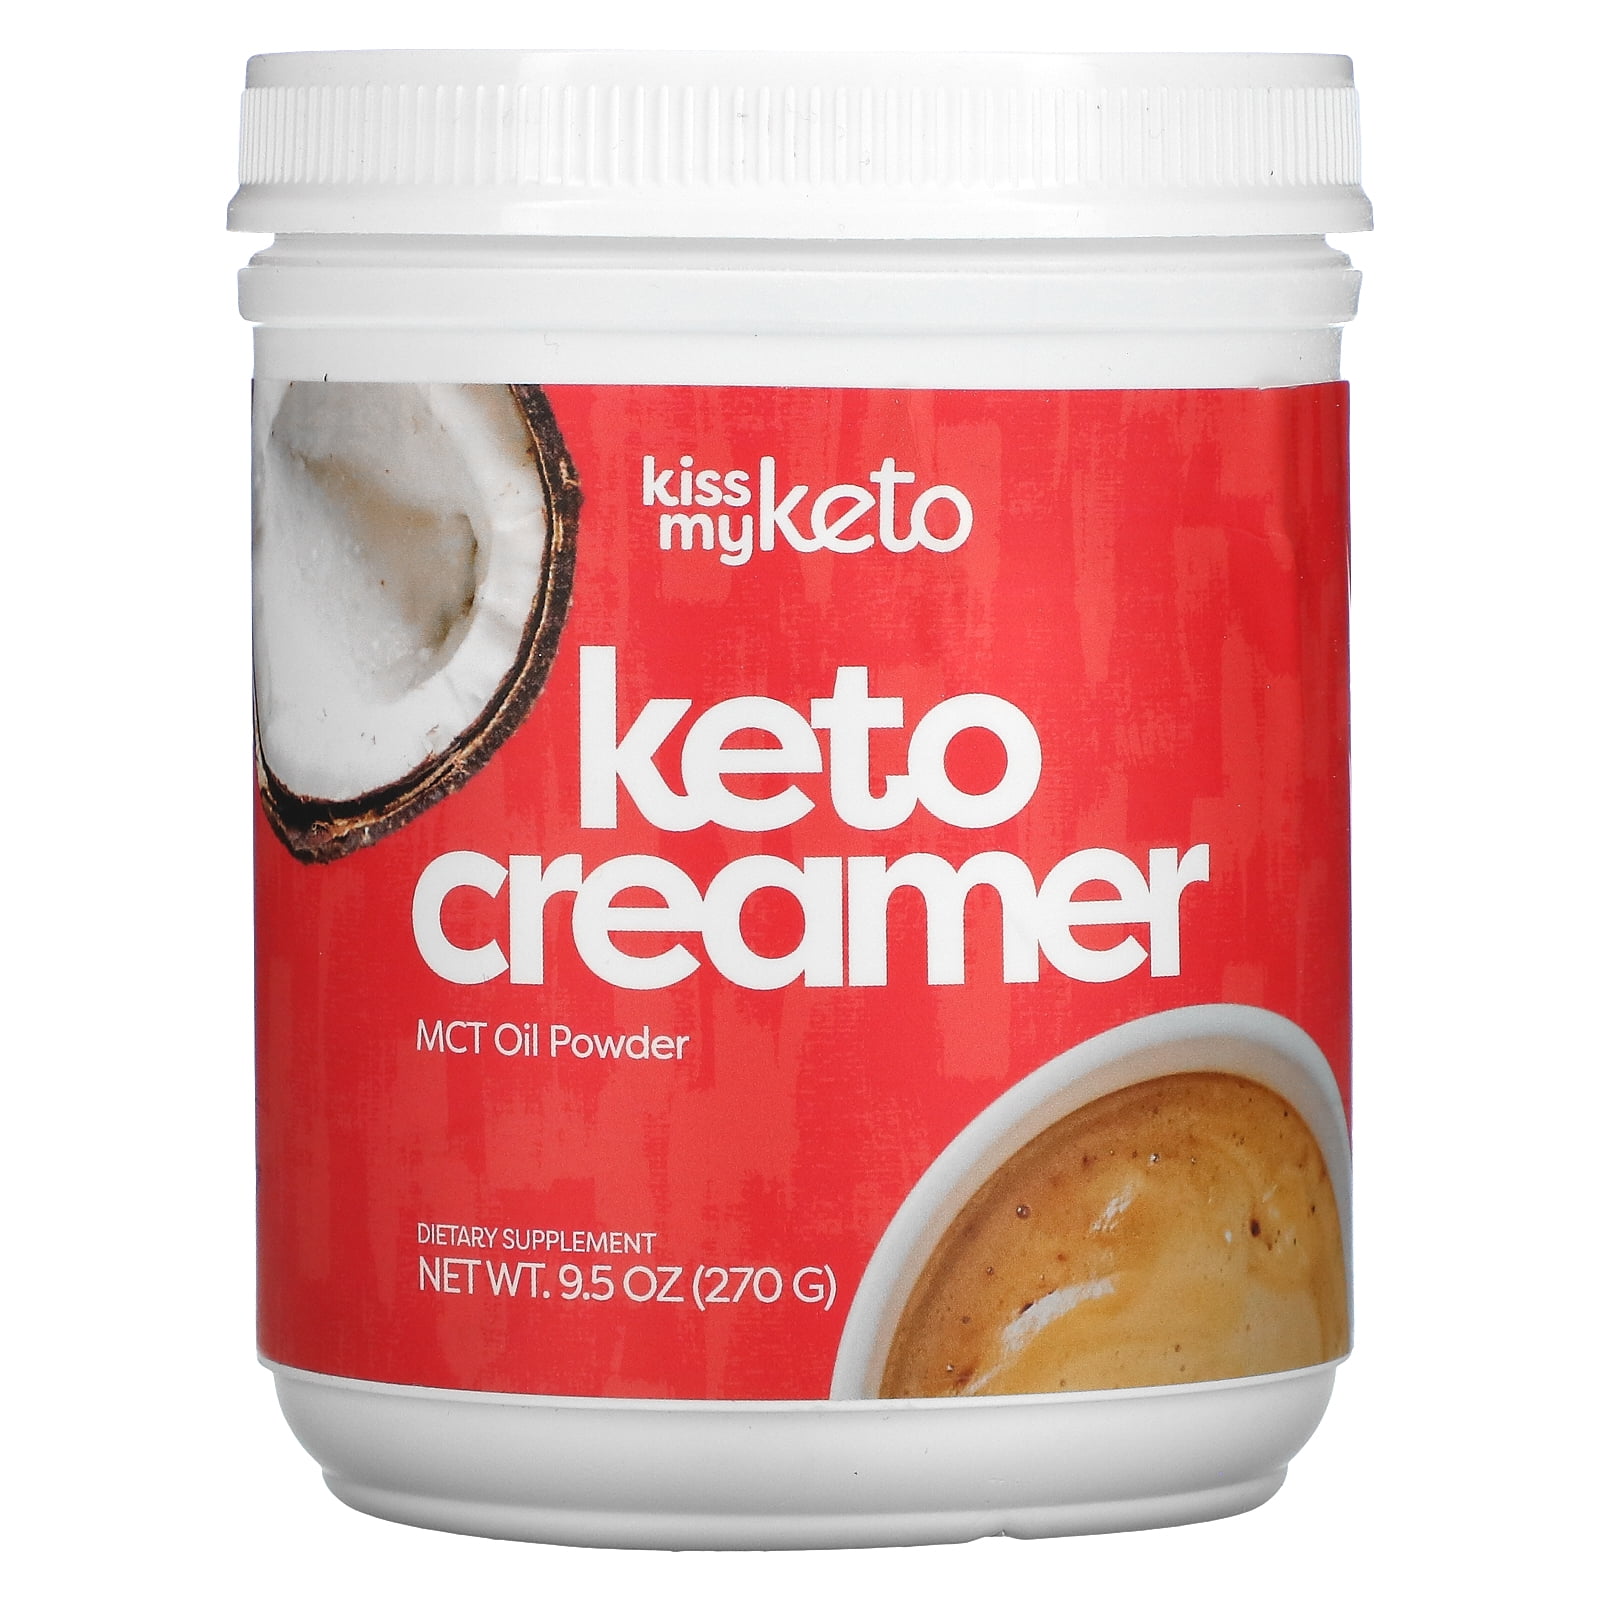 Kiss My Keto Keto Creamer MCT Oil Powder, 9.5 oz (270 g)